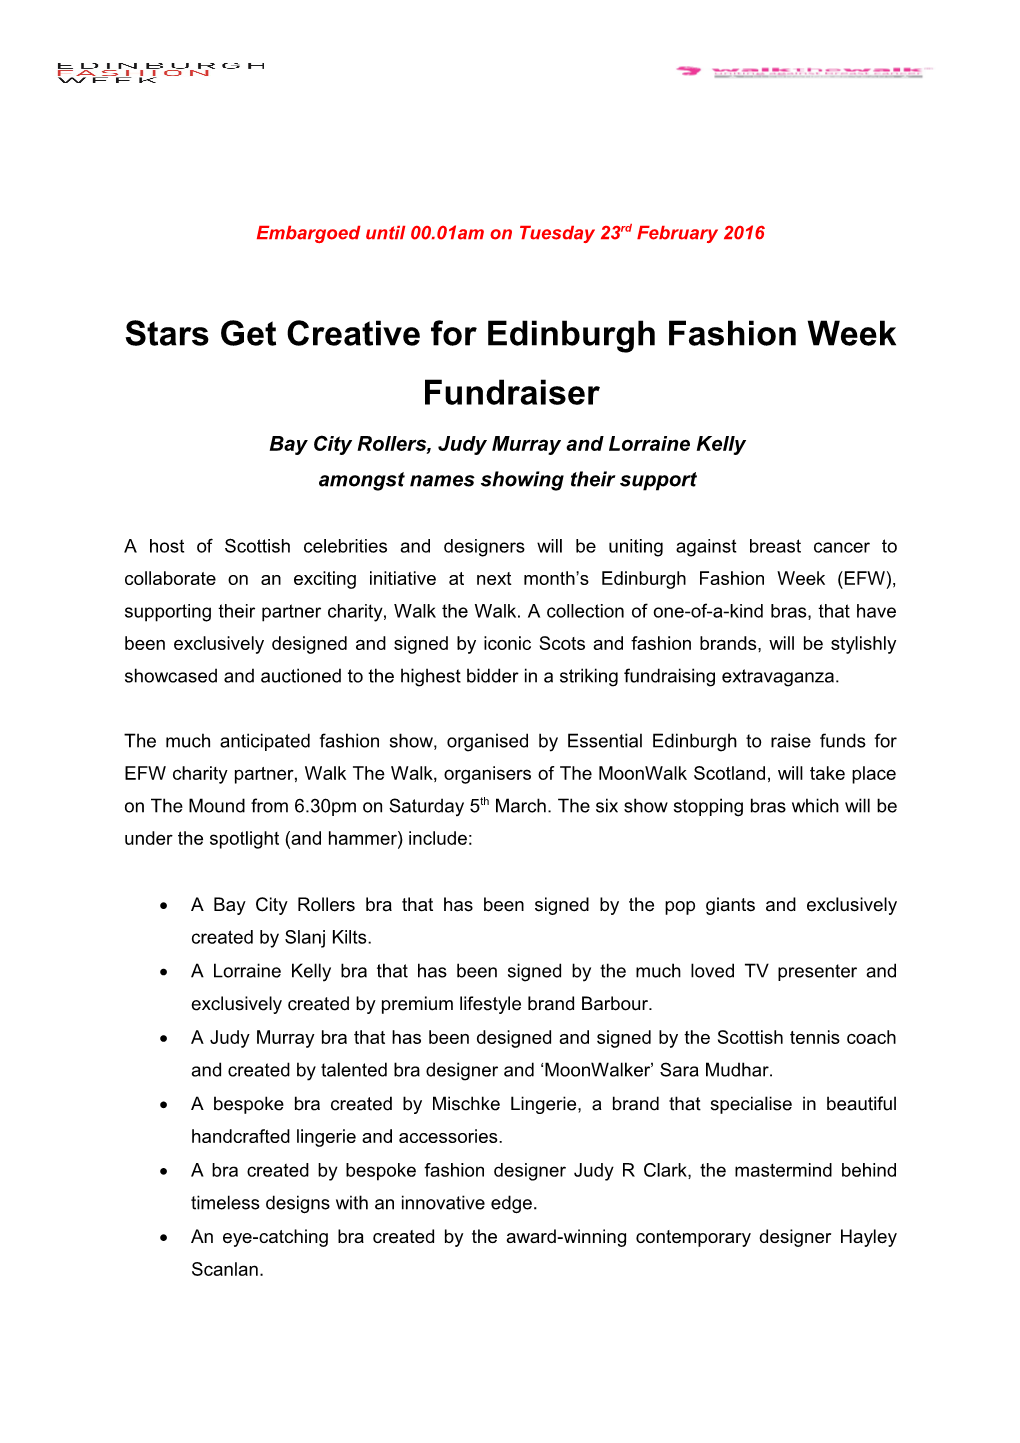 Stars Get Creative for Edinburgh Fashion Week Fundraiser